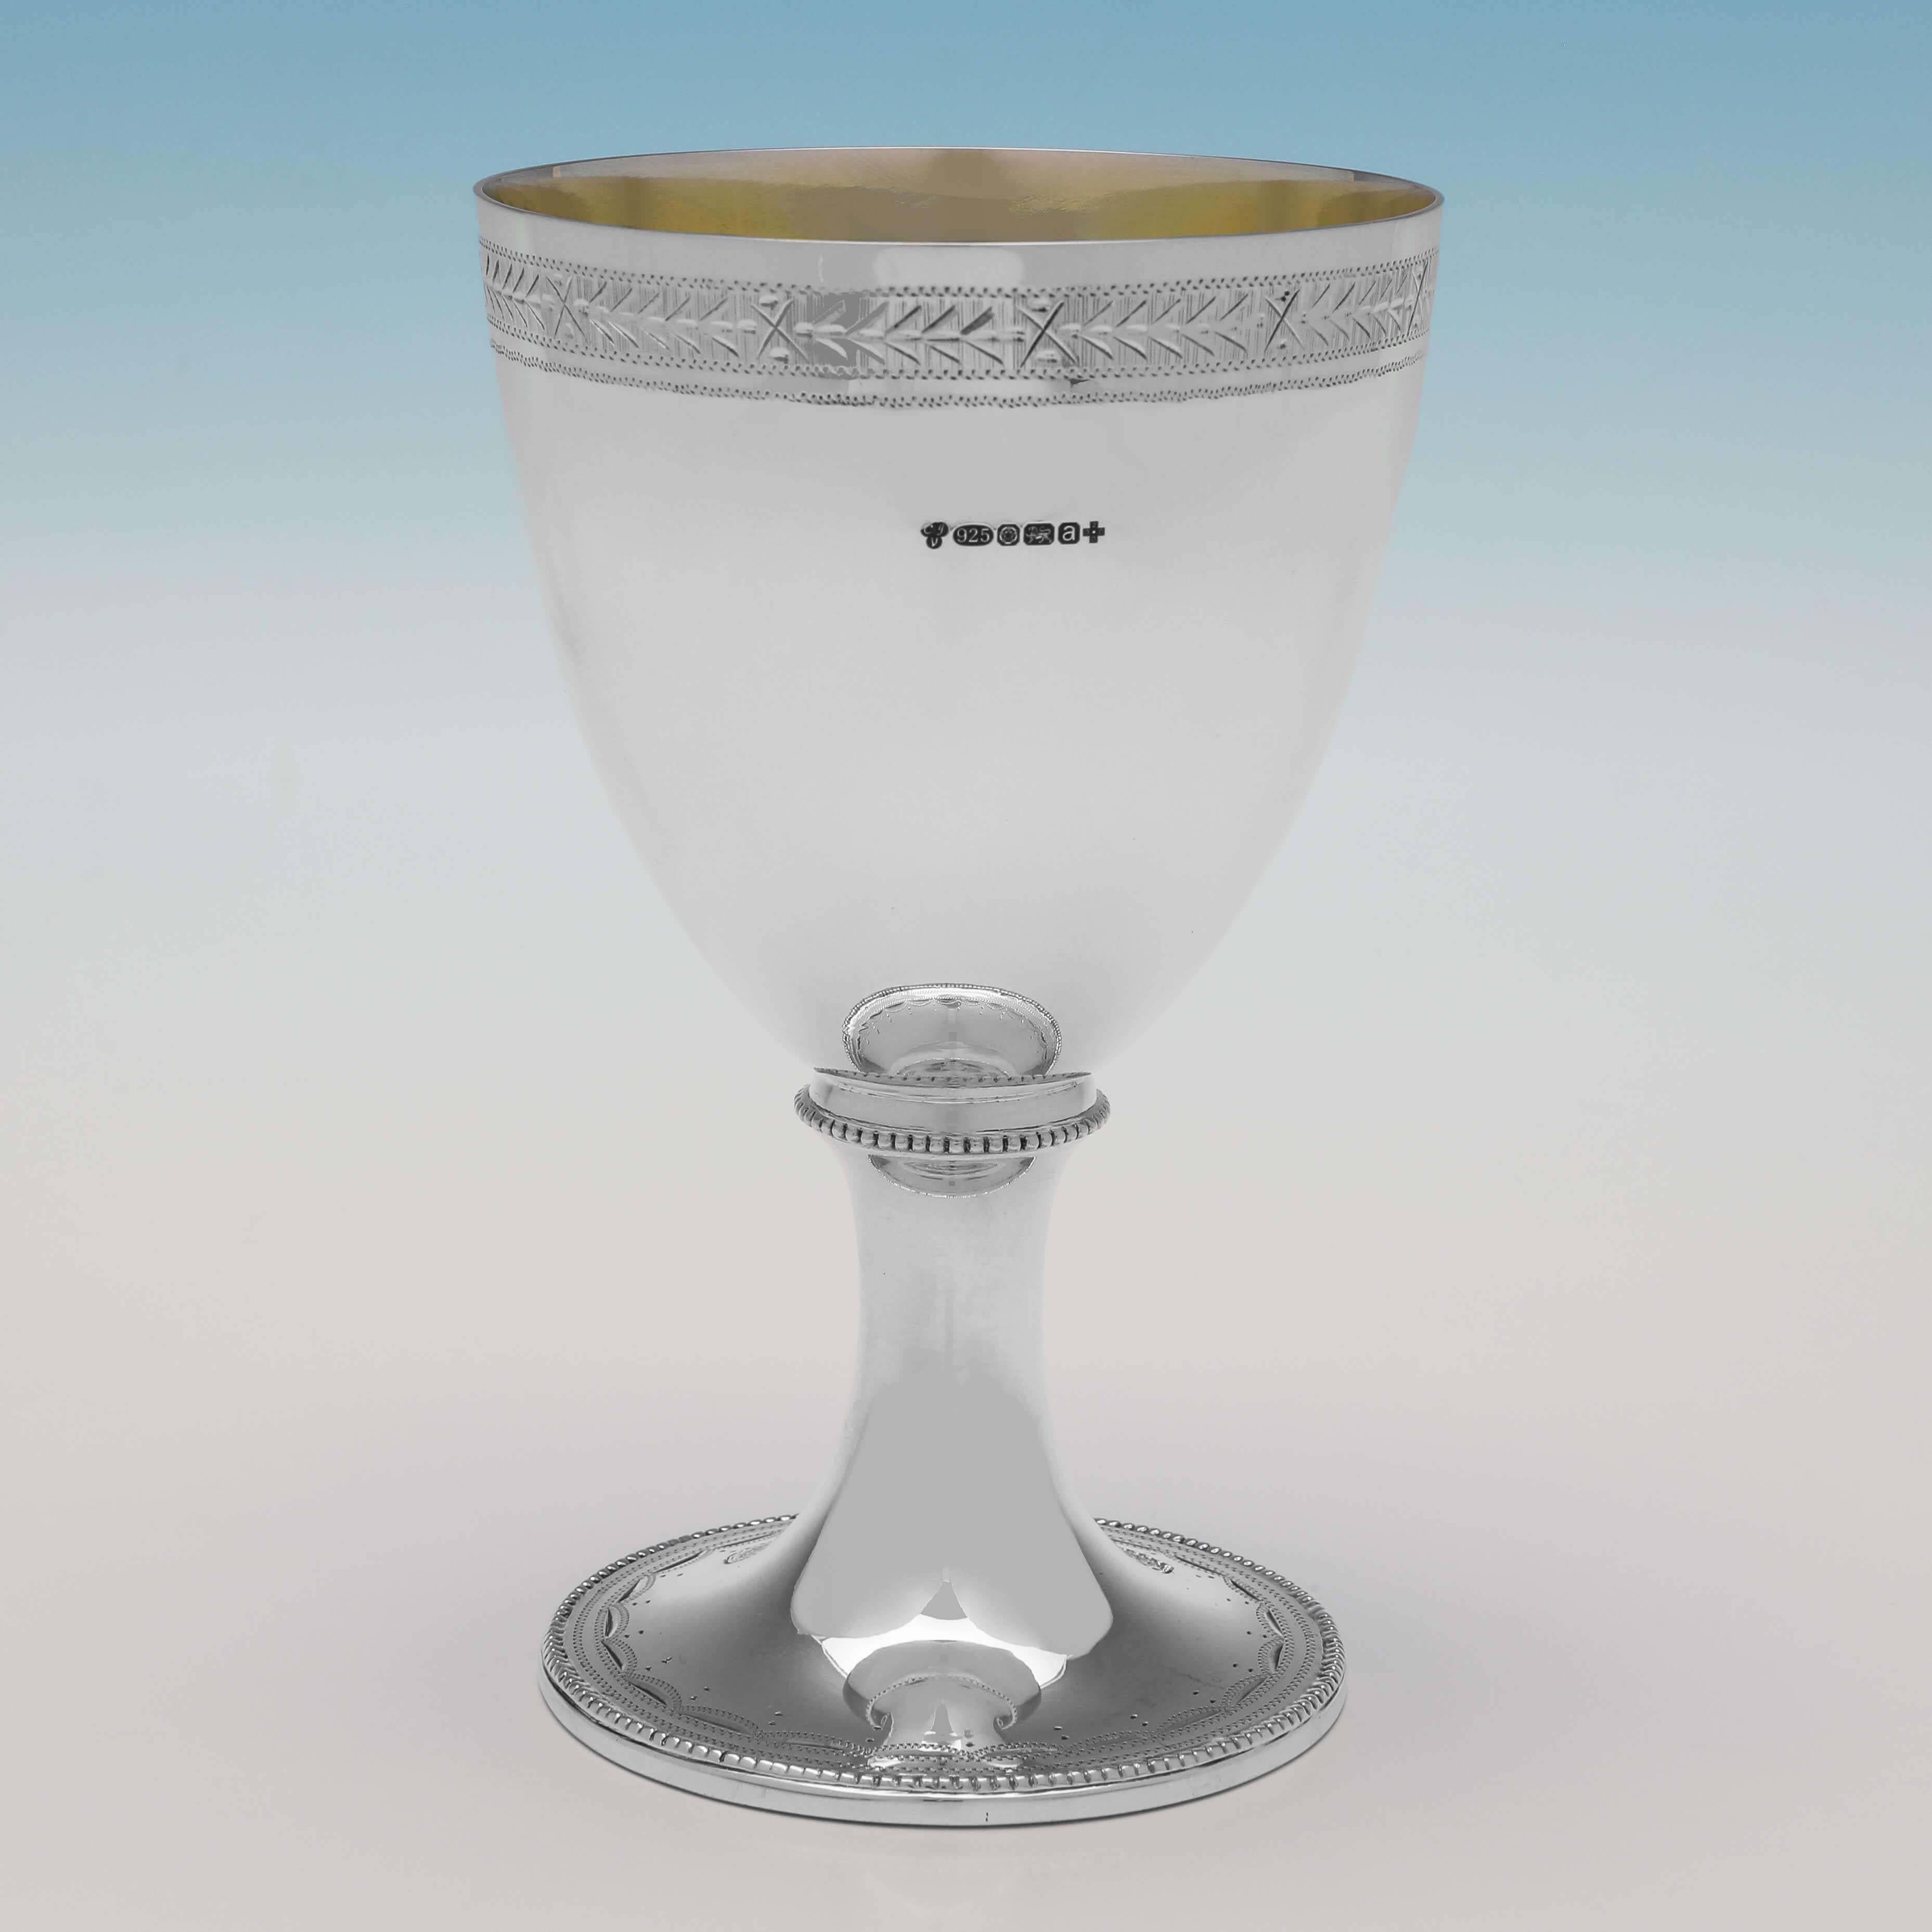 Neoclassical Revival Neoclassical Design Set of 6 Sterling Silver Goblets - C. J. Vander 2000 For Sale